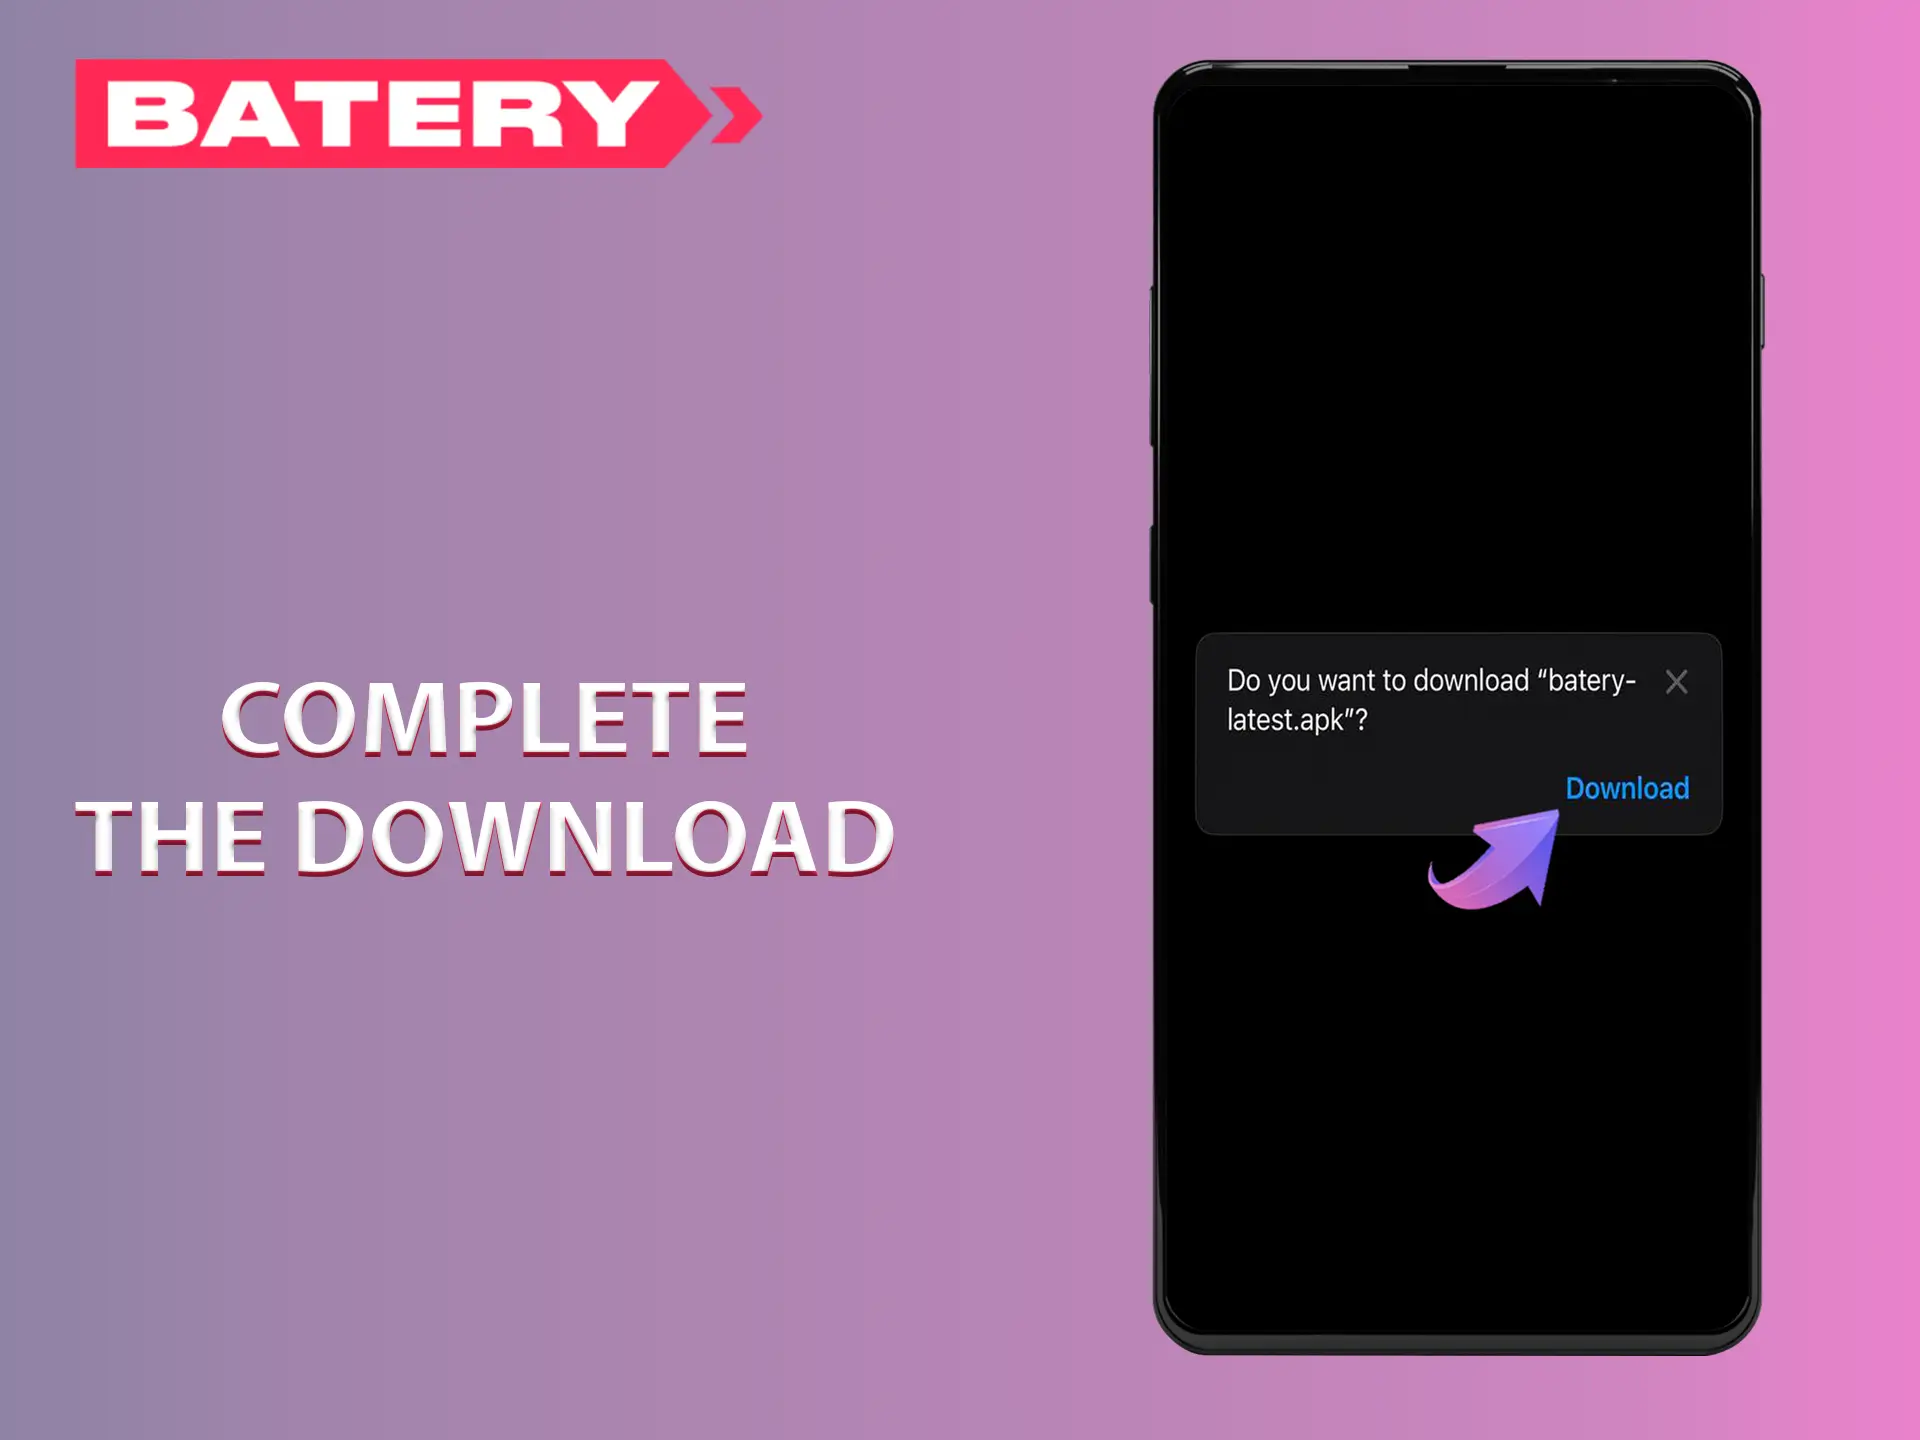 Start downloading the Batery app.